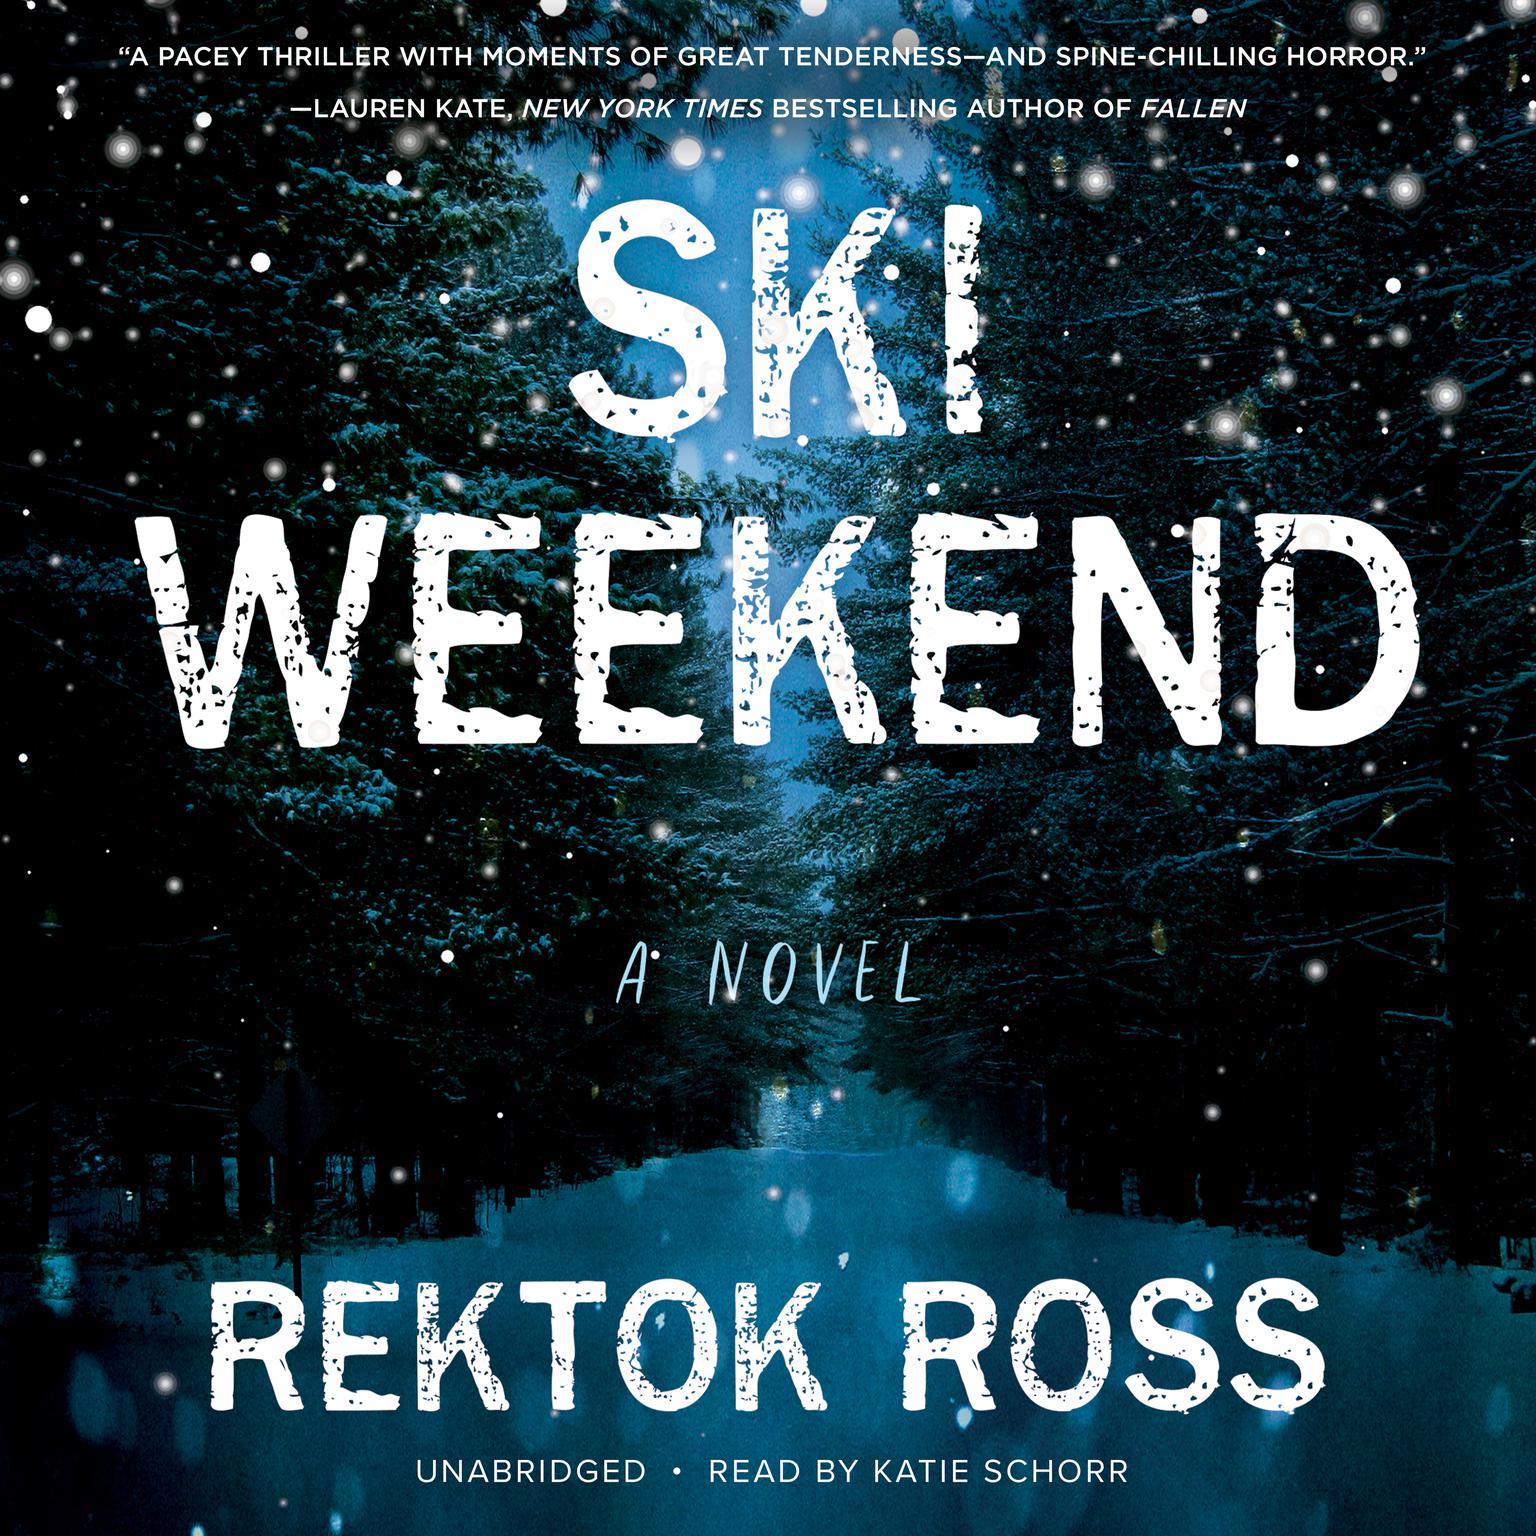 Ski Weekend: A Novel Audiobook, by Rektok Ross